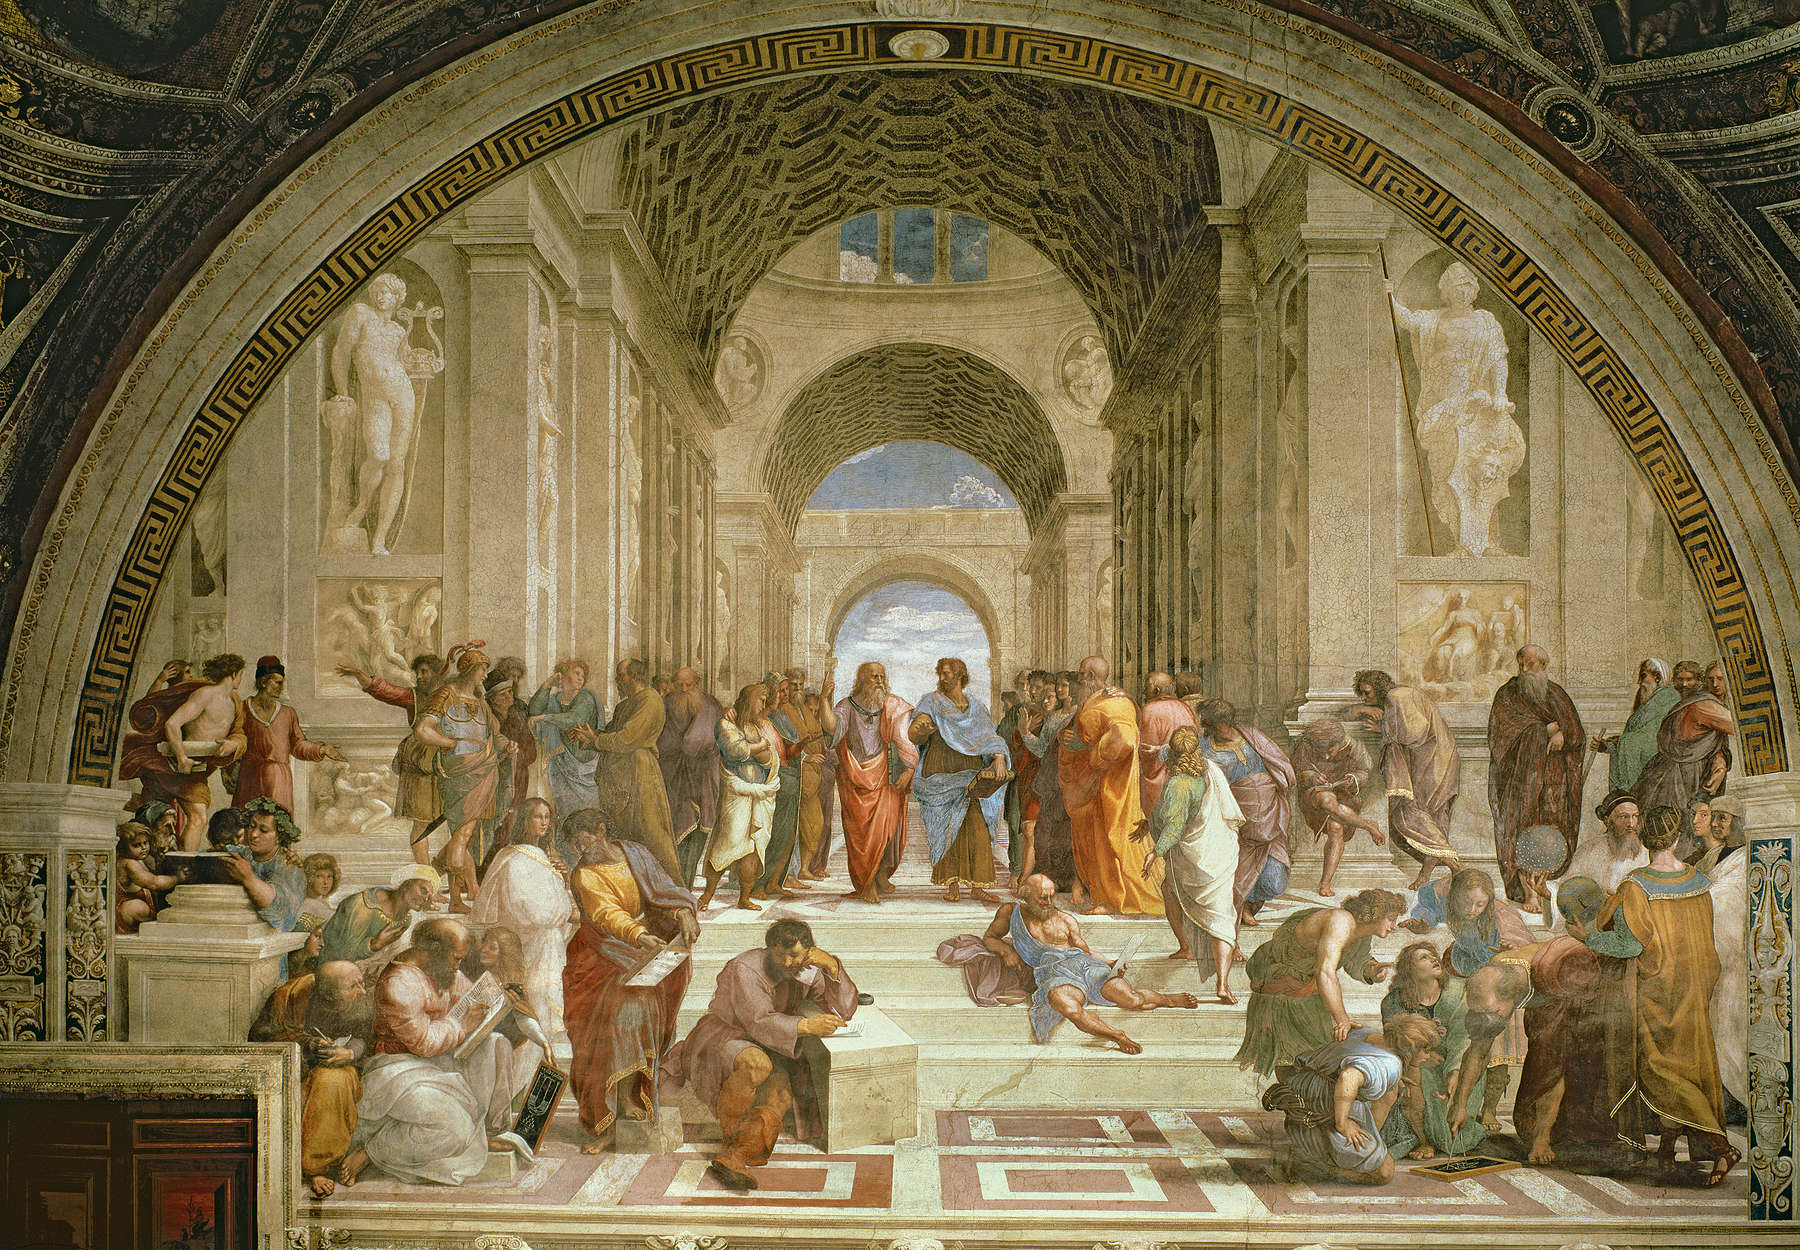             Mural "Atenas escolar" de Raphael
        